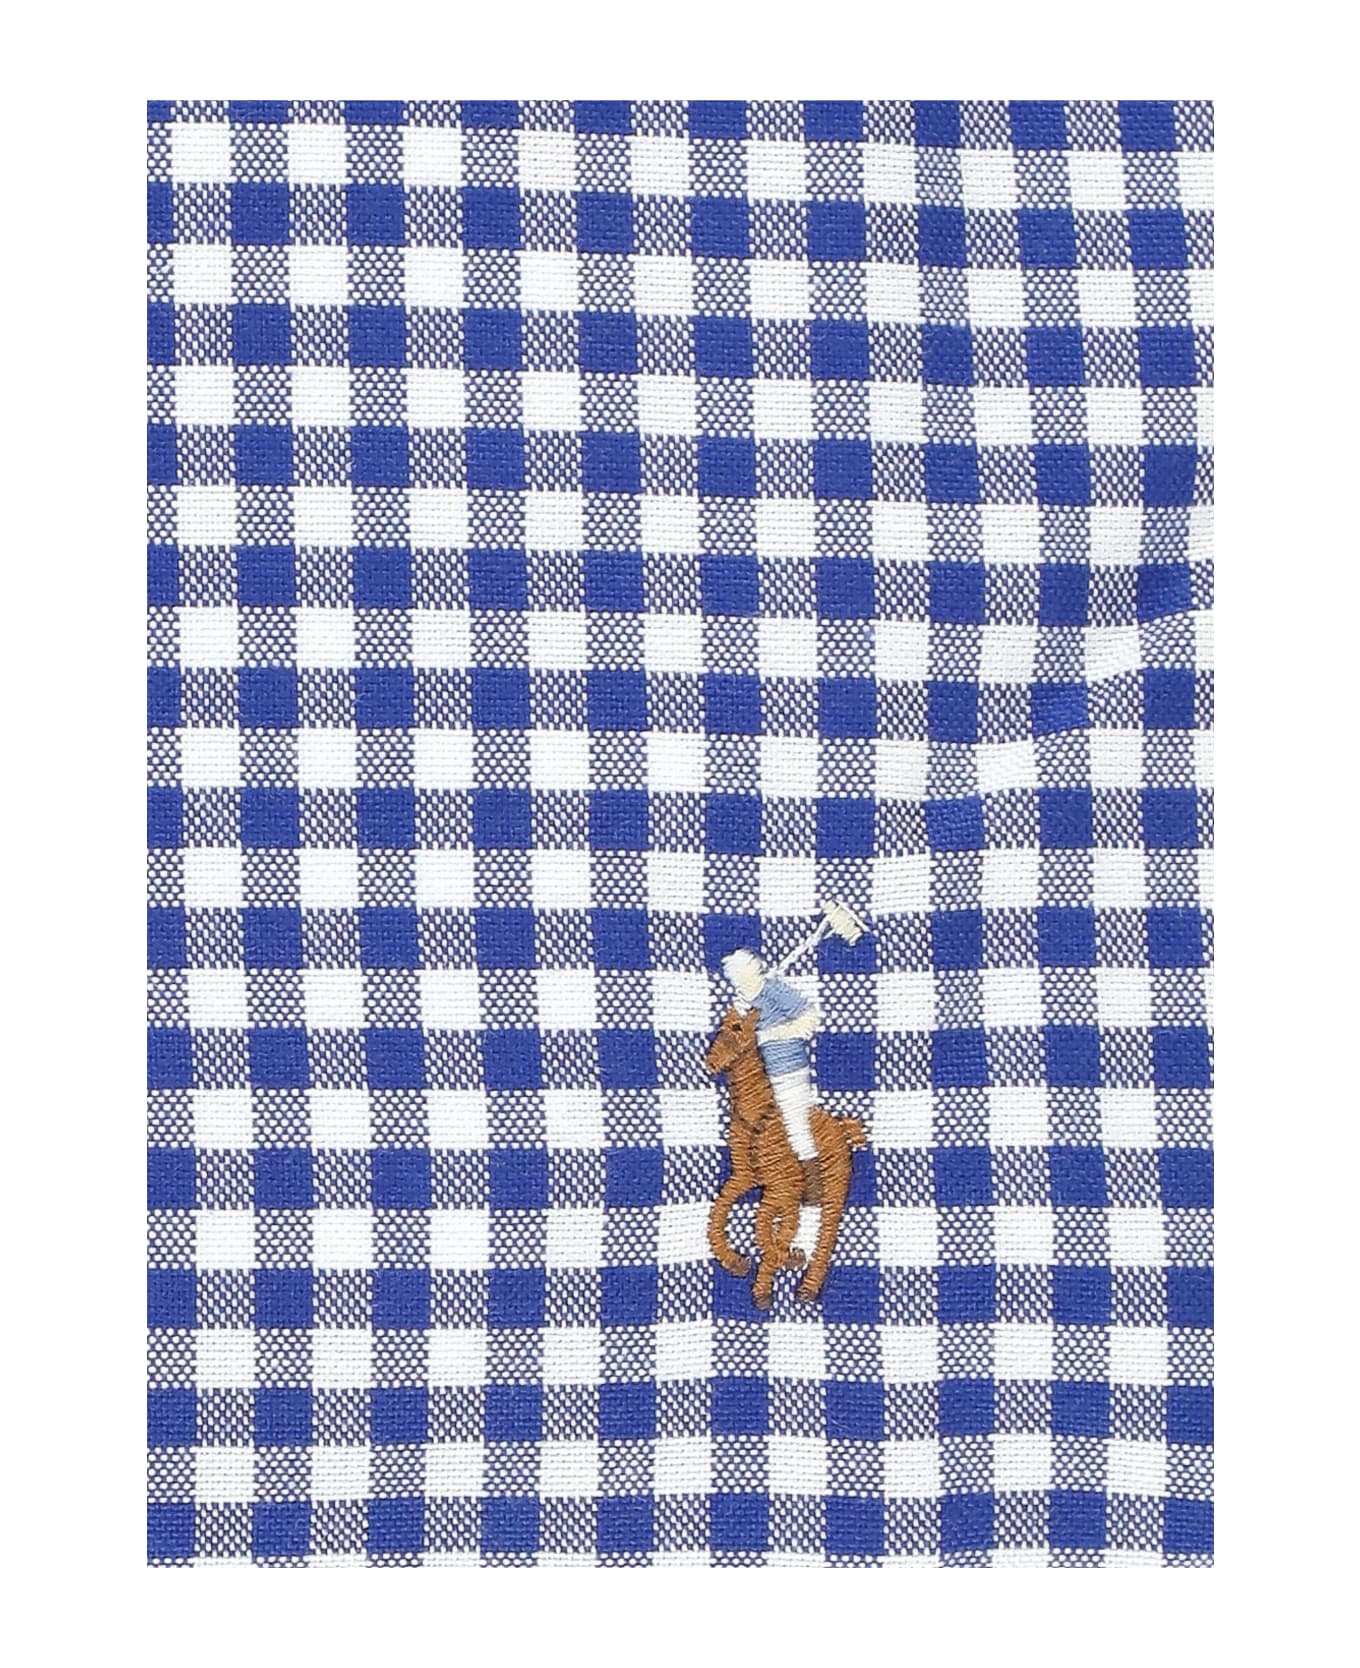 Ralph Lauren Pony Cotton Shirt - Blue